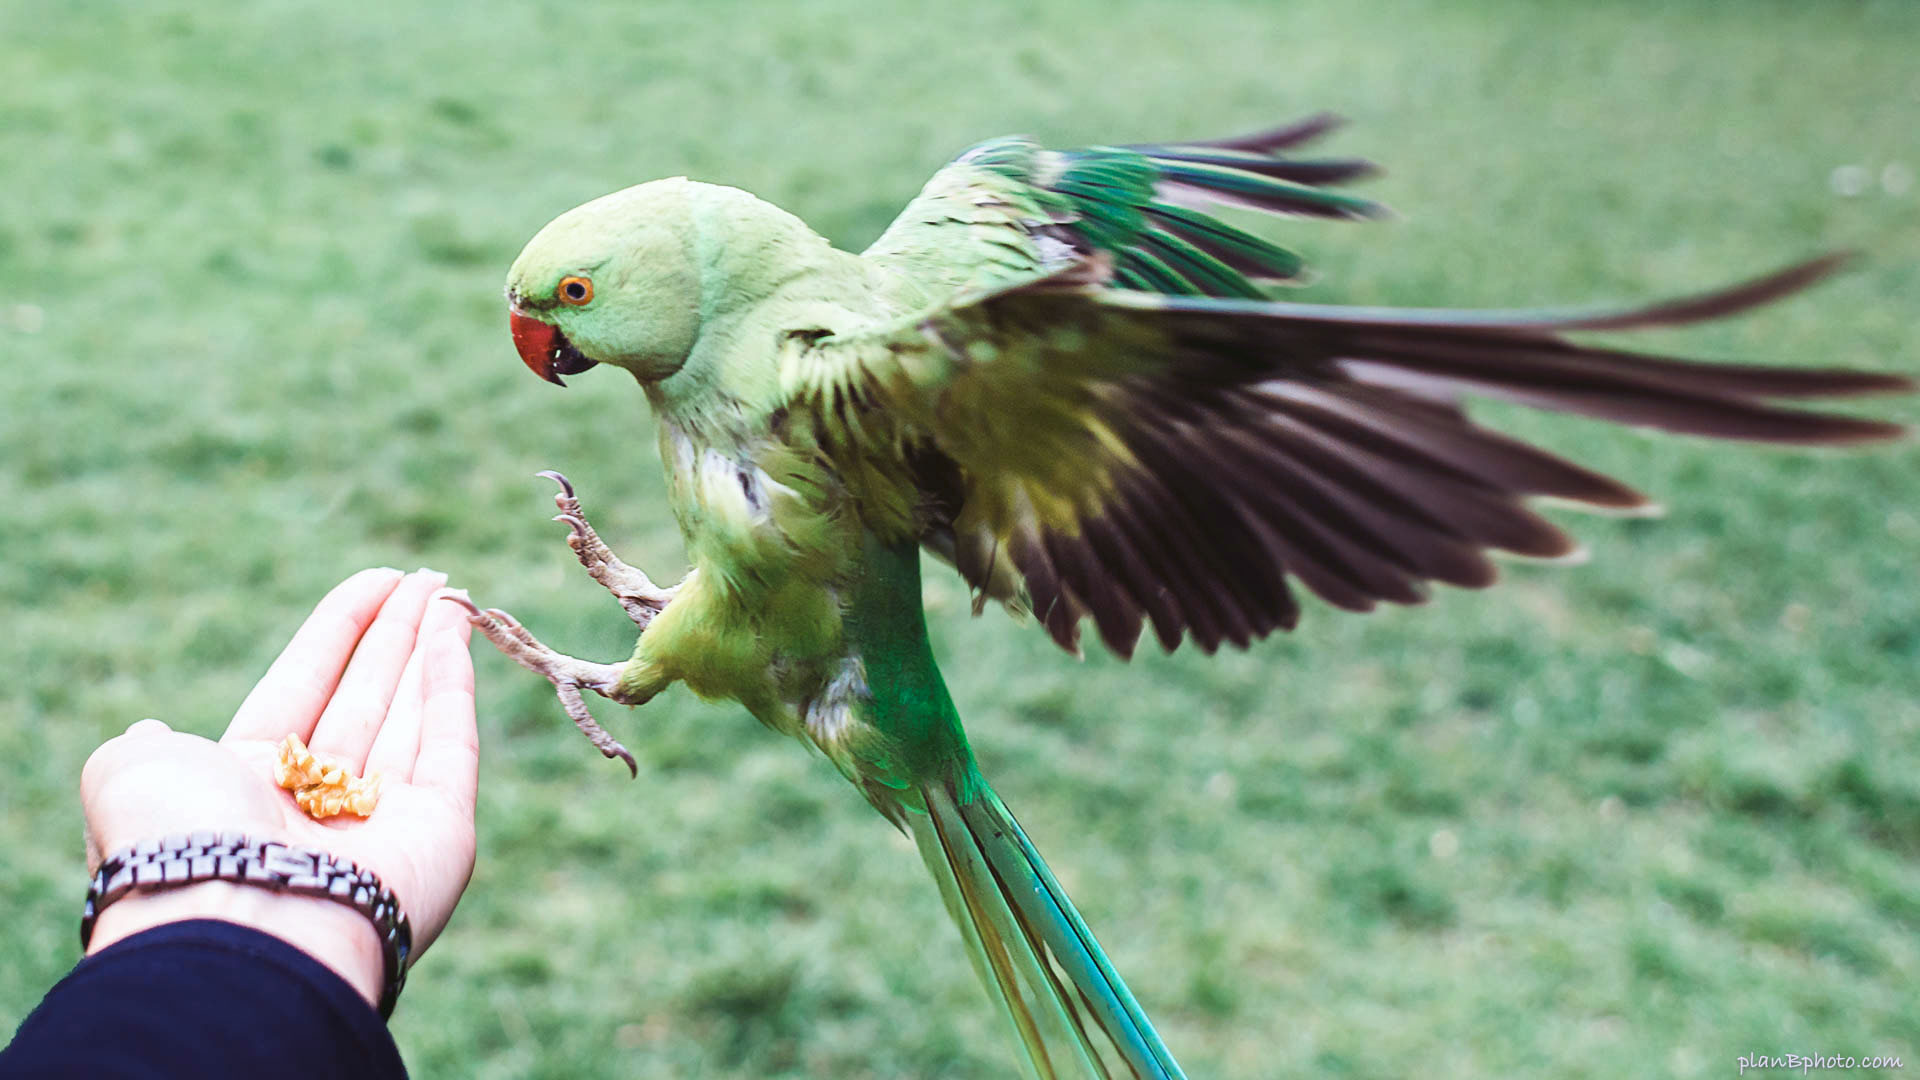 Feeding green London parrots